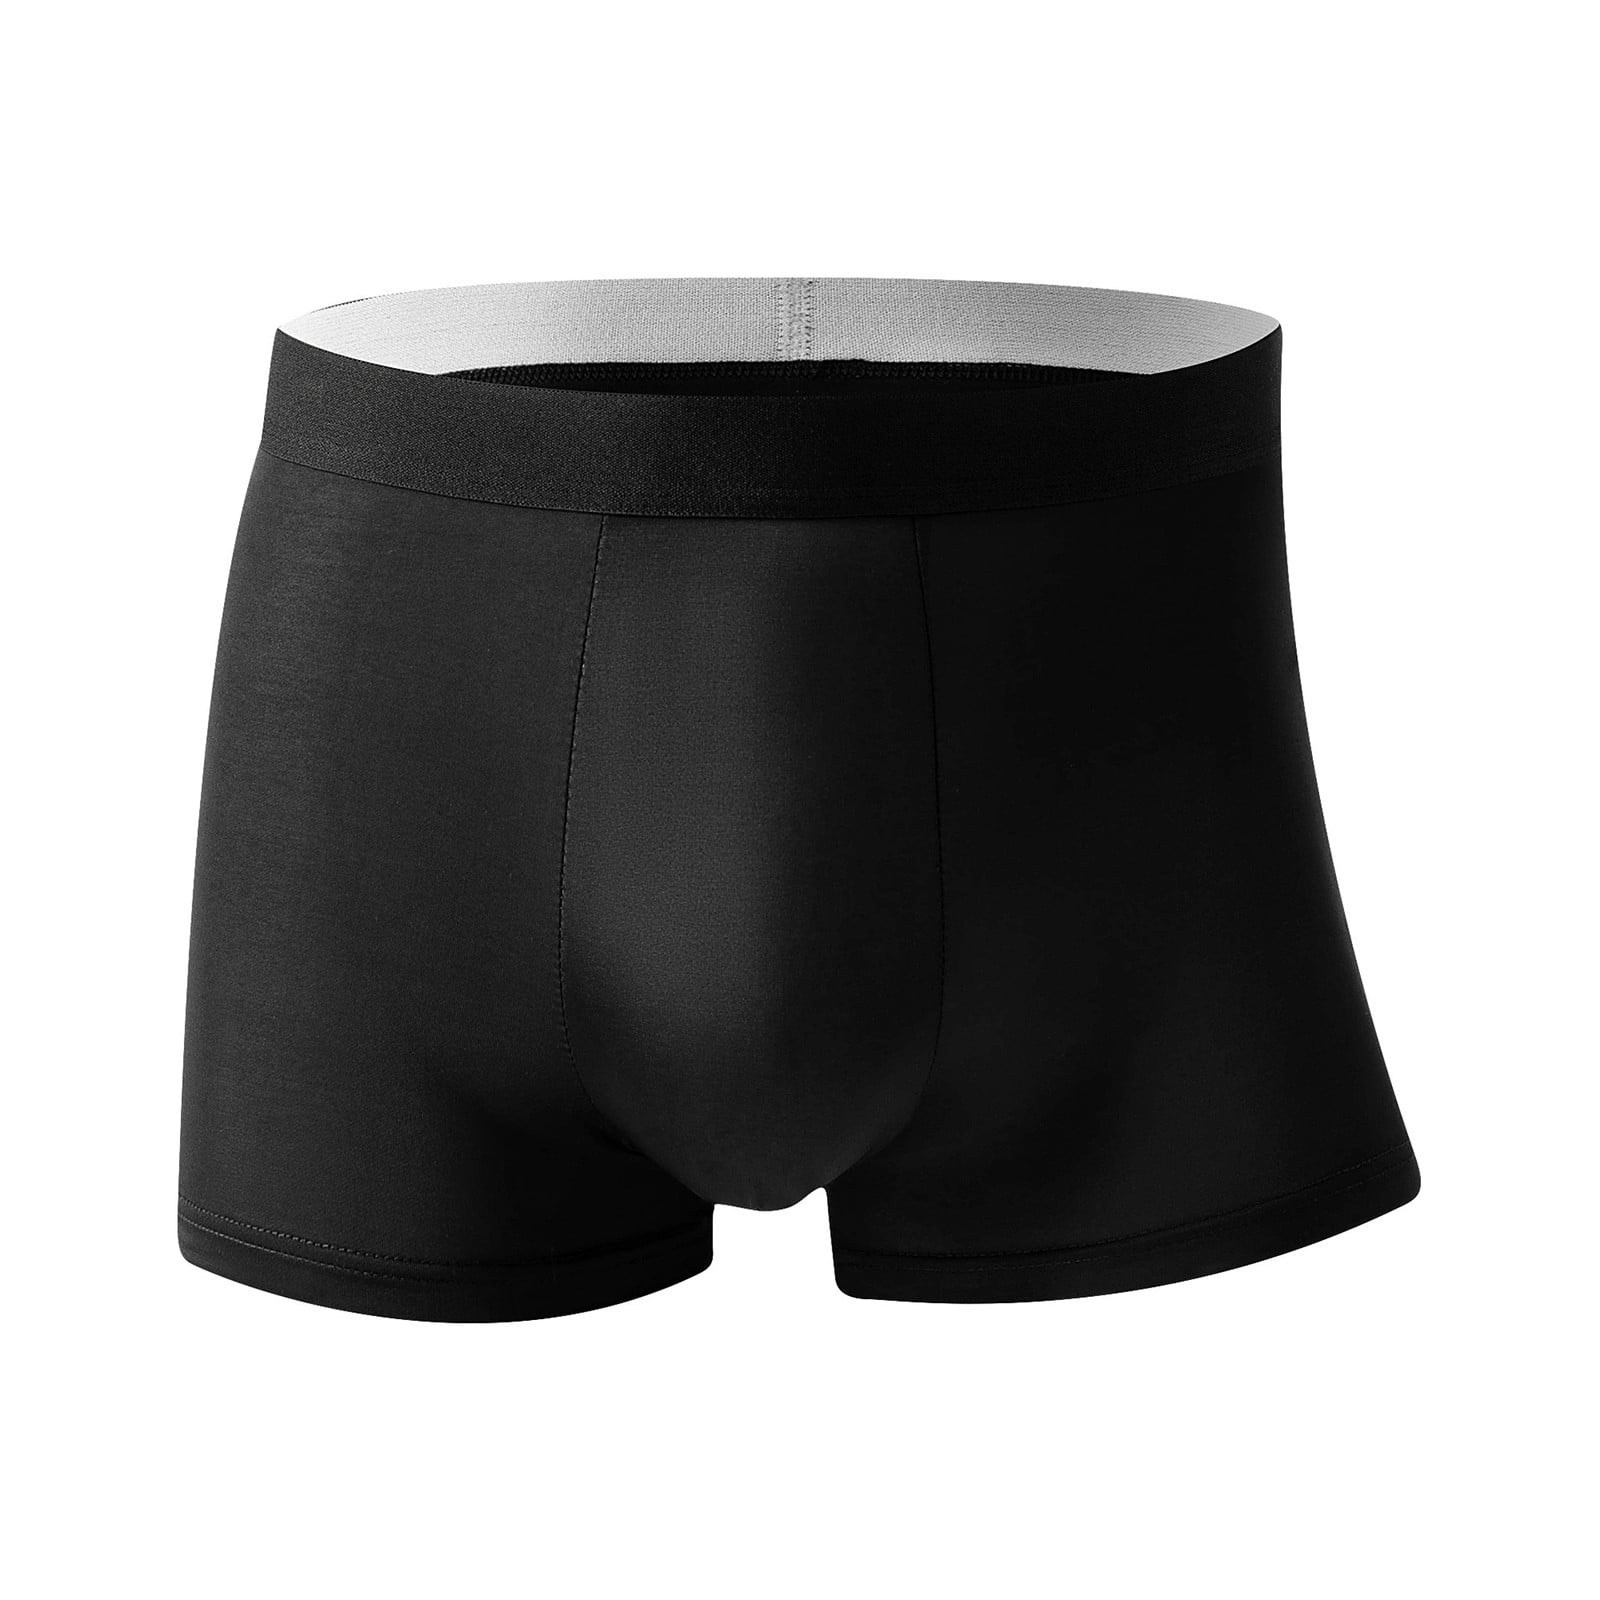 AdBFJAF Panties Sexy Panties for Men Male Ultra Thin Mesh Ice Silk ...